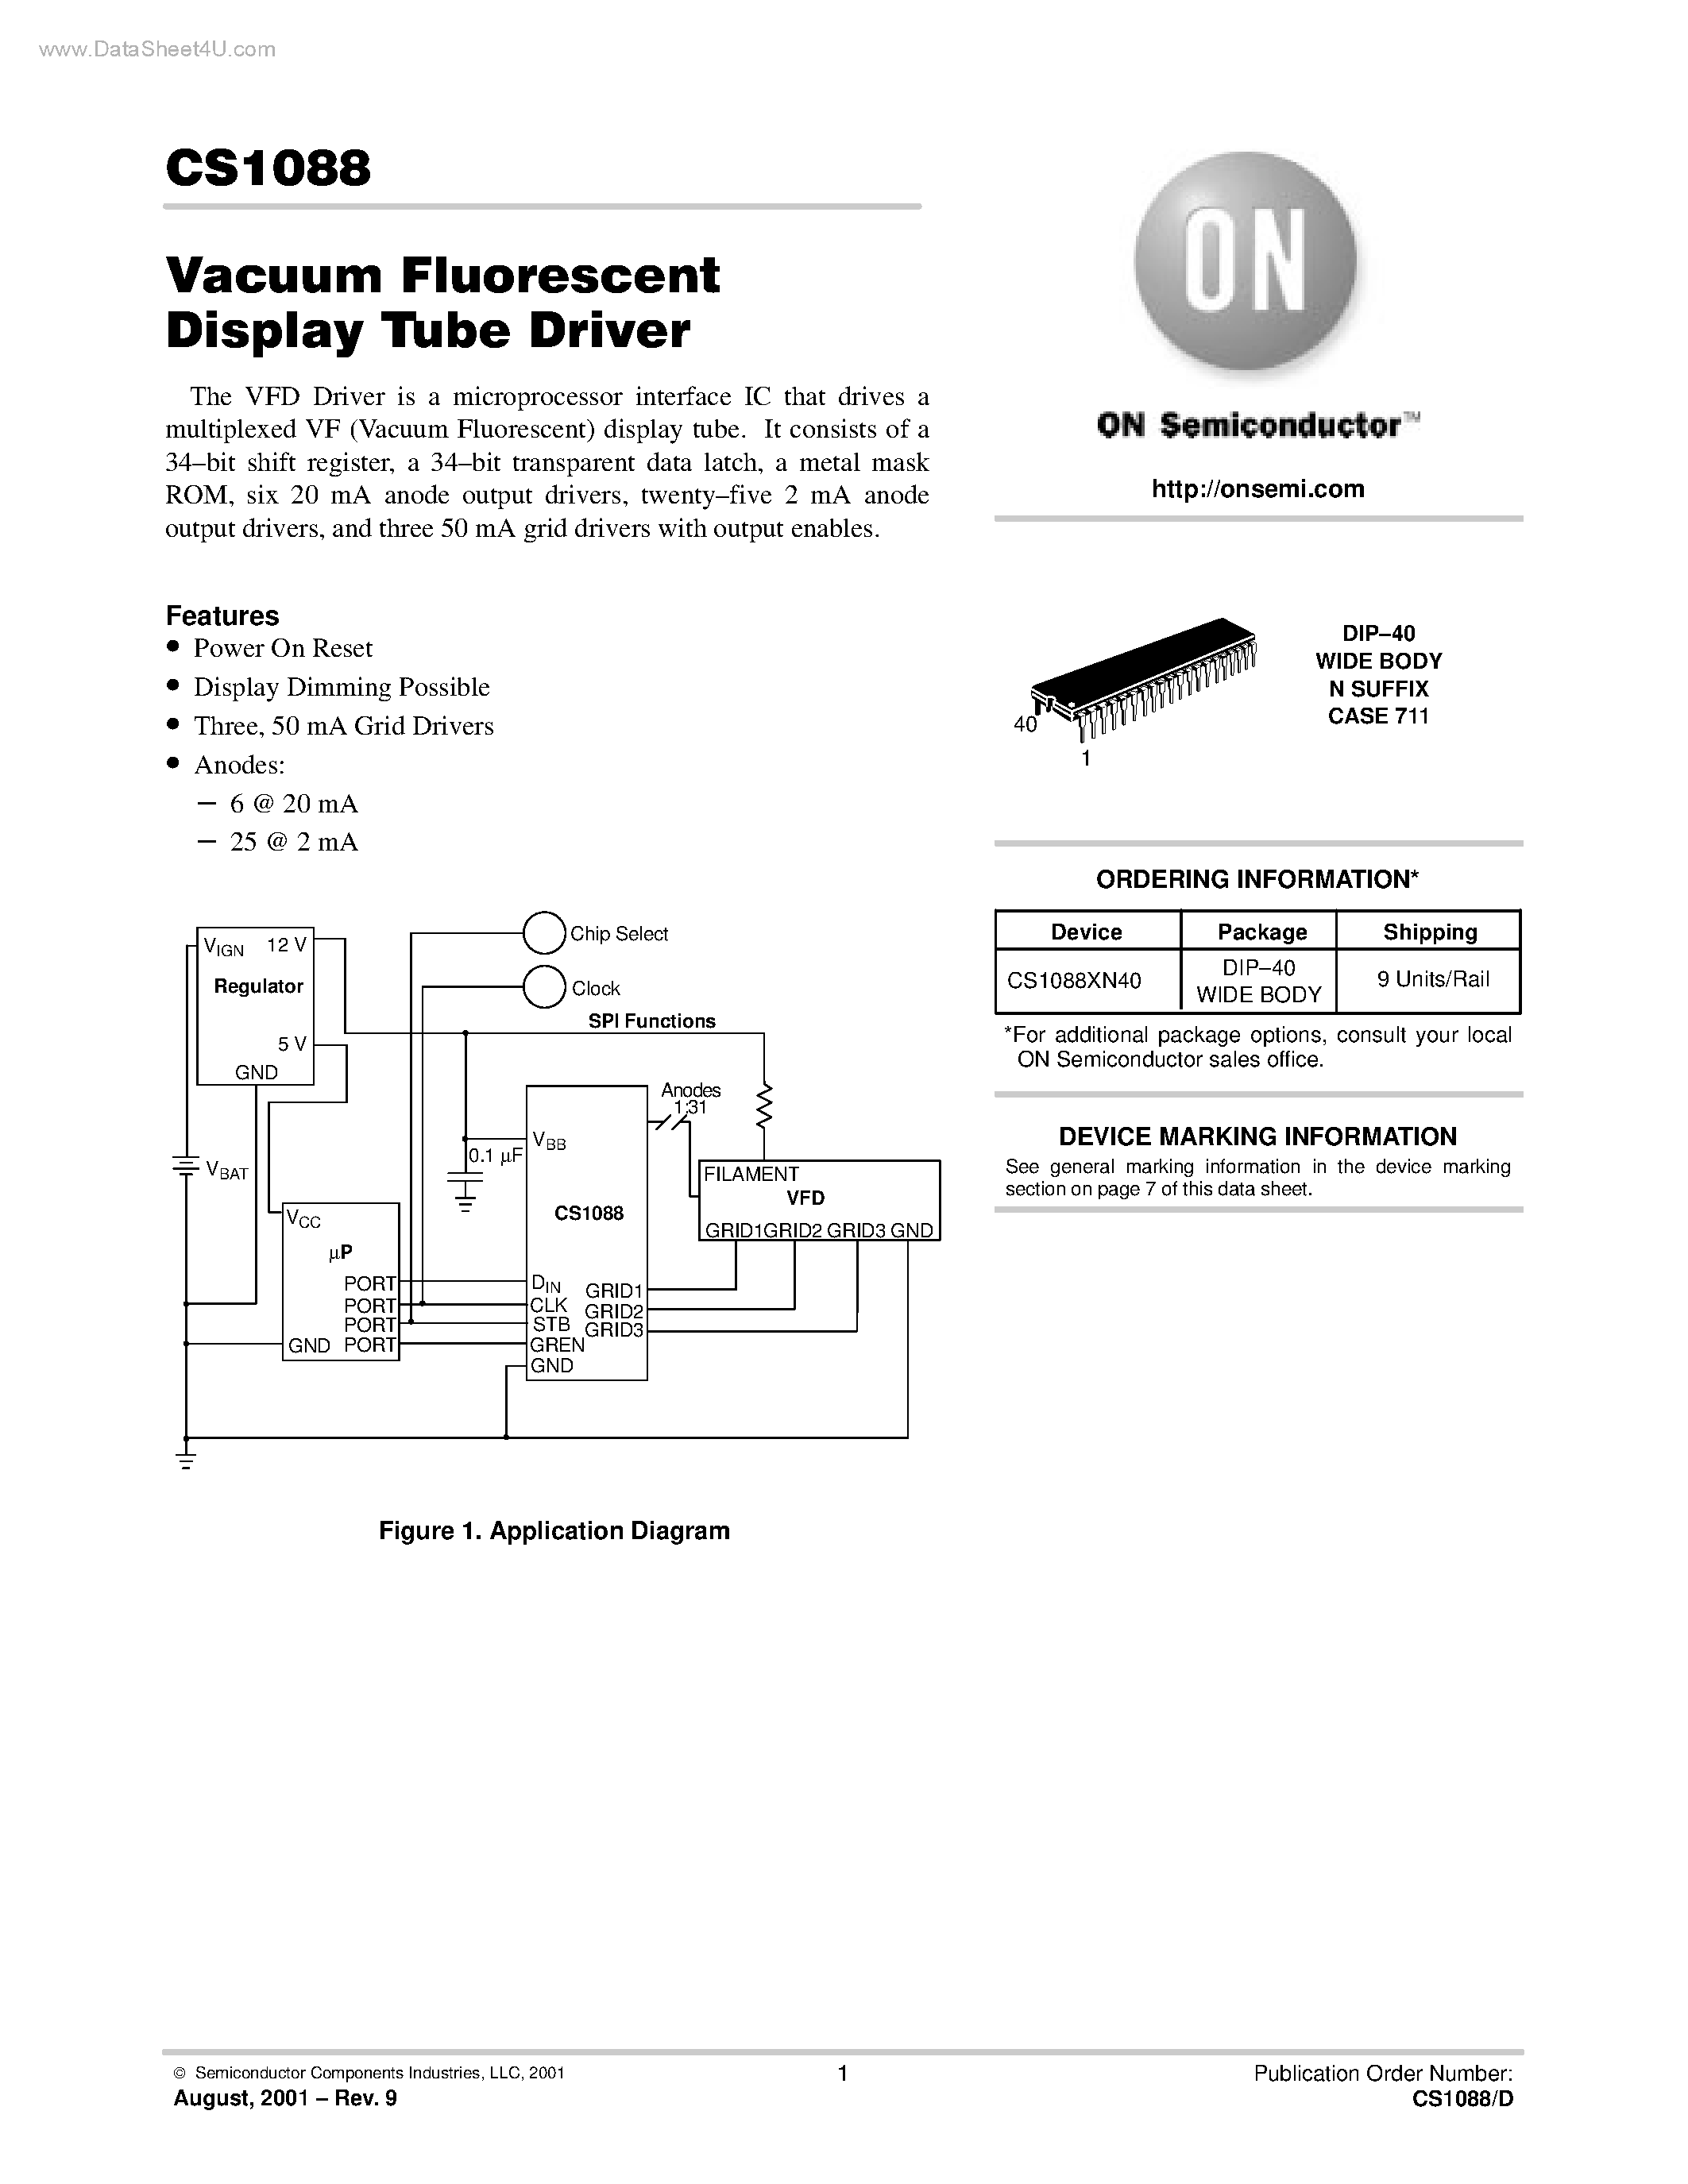 Datasheet CS1088 - Vacuum Fluorescent Display Tube Driver page 1